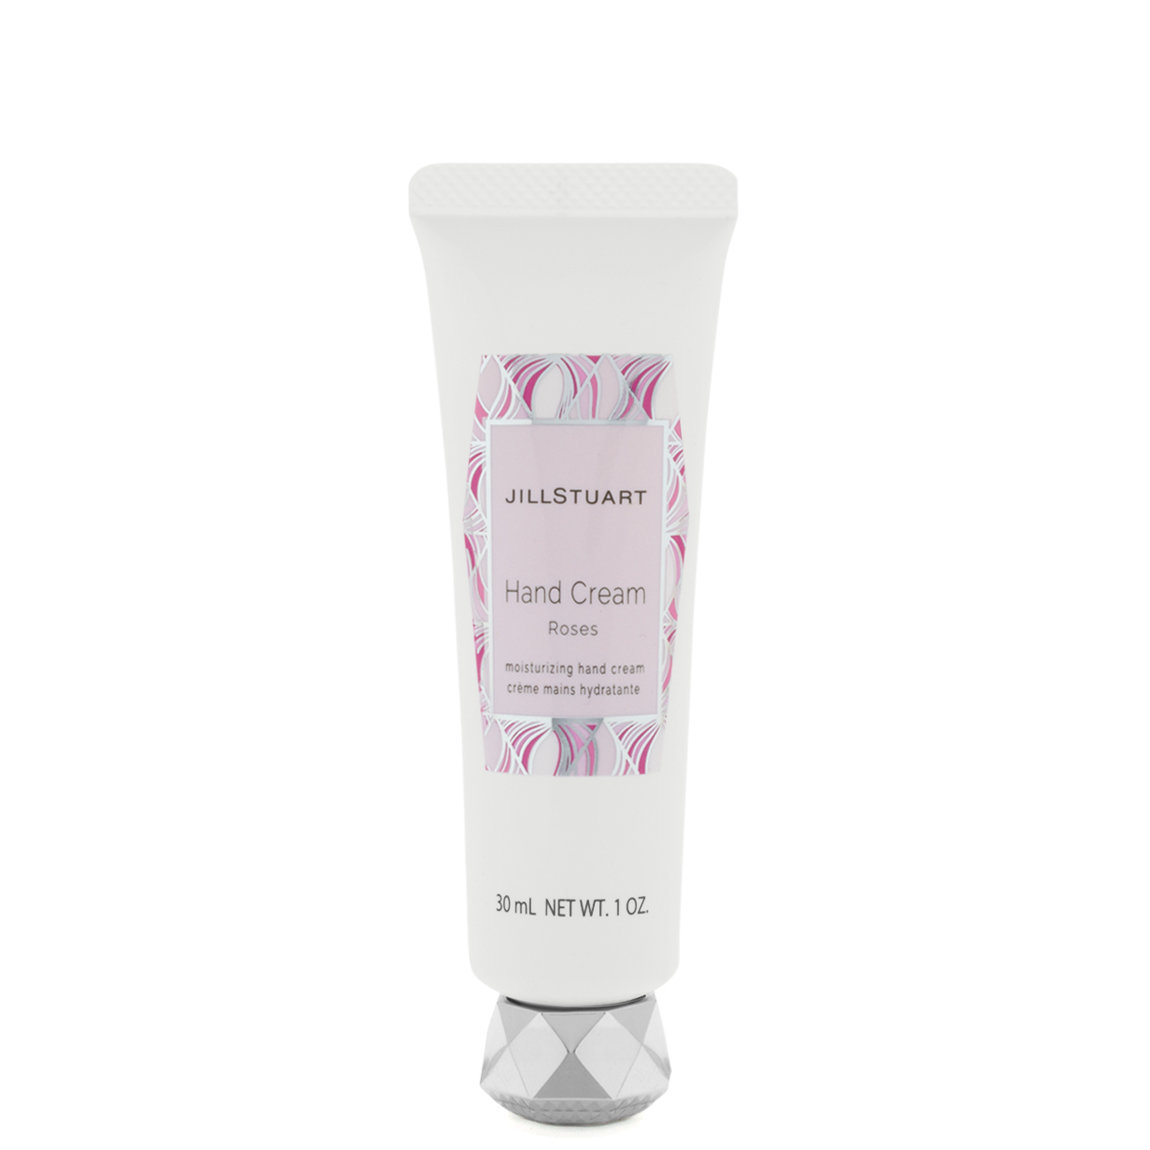 JILL STUART Beauty Hand Cream - Roses 30 g alternative view 1 - product swatch.